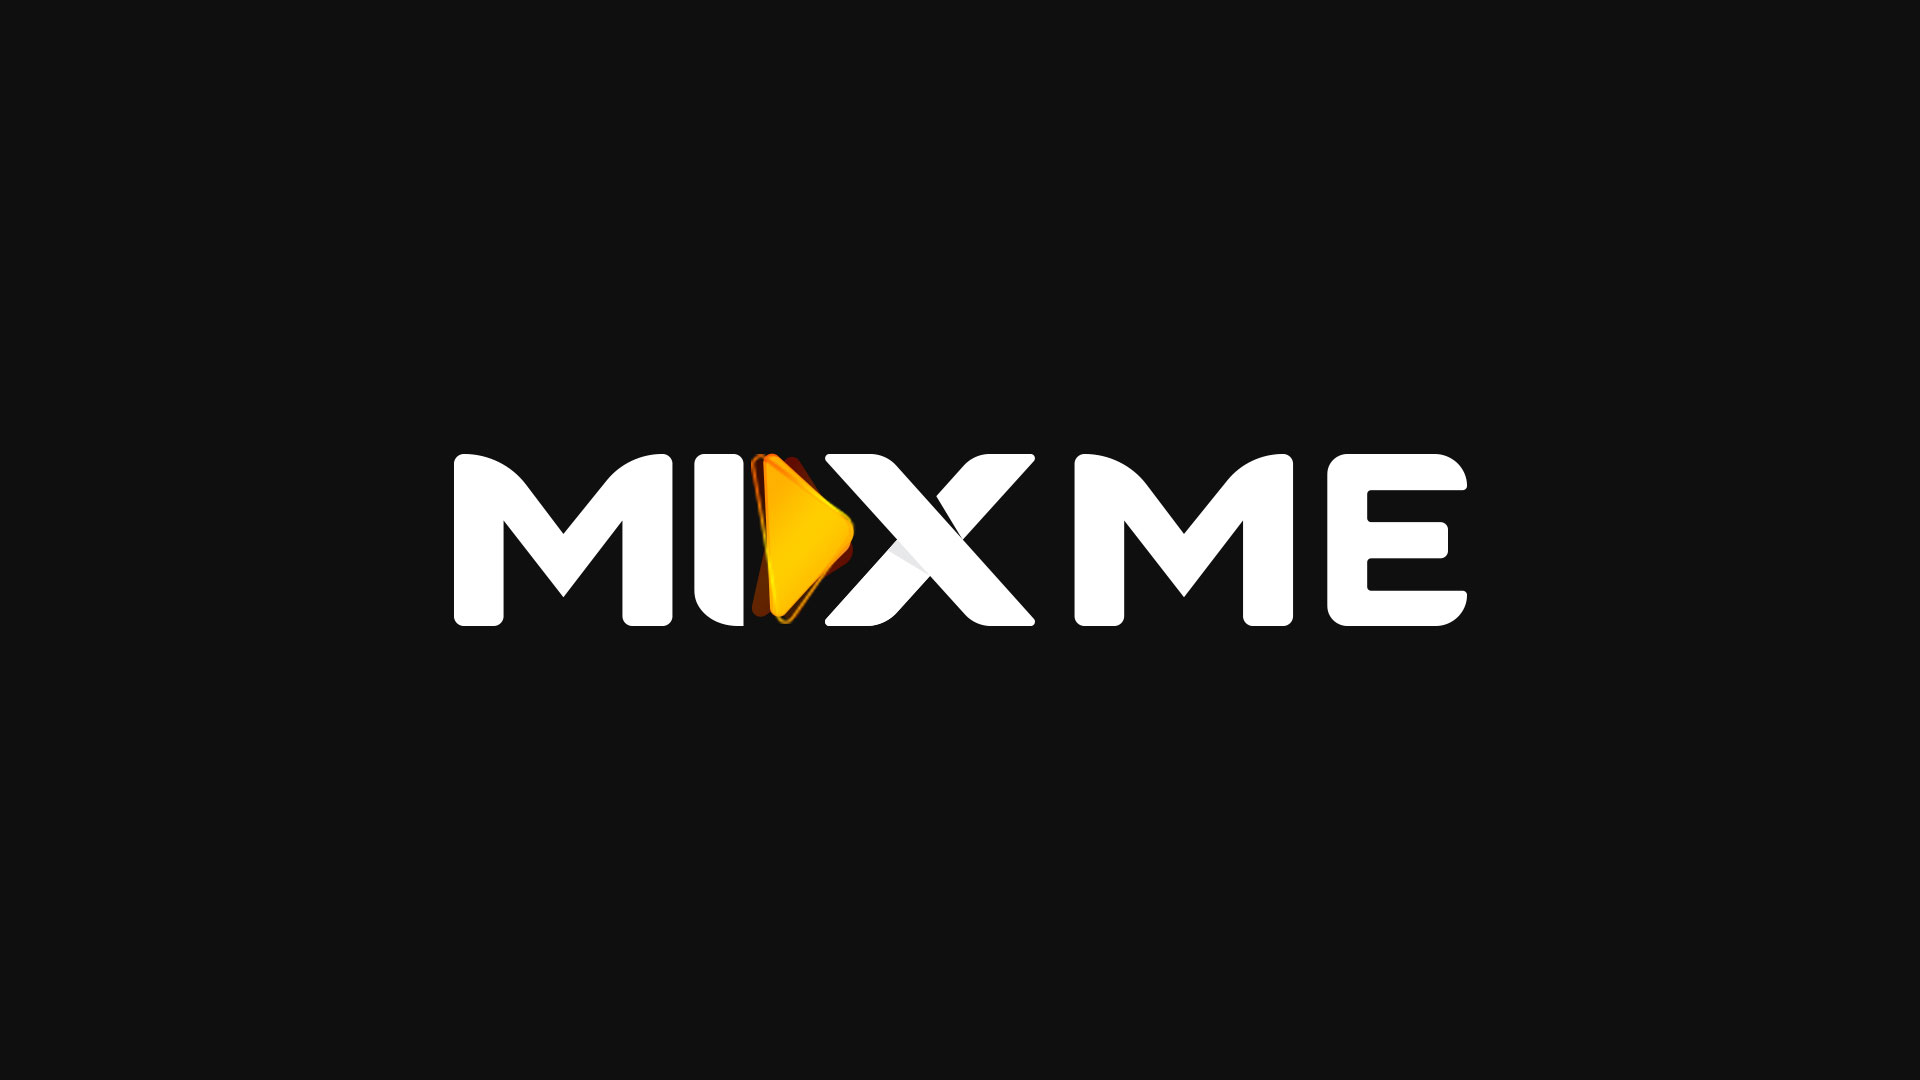 MIXME Logotype